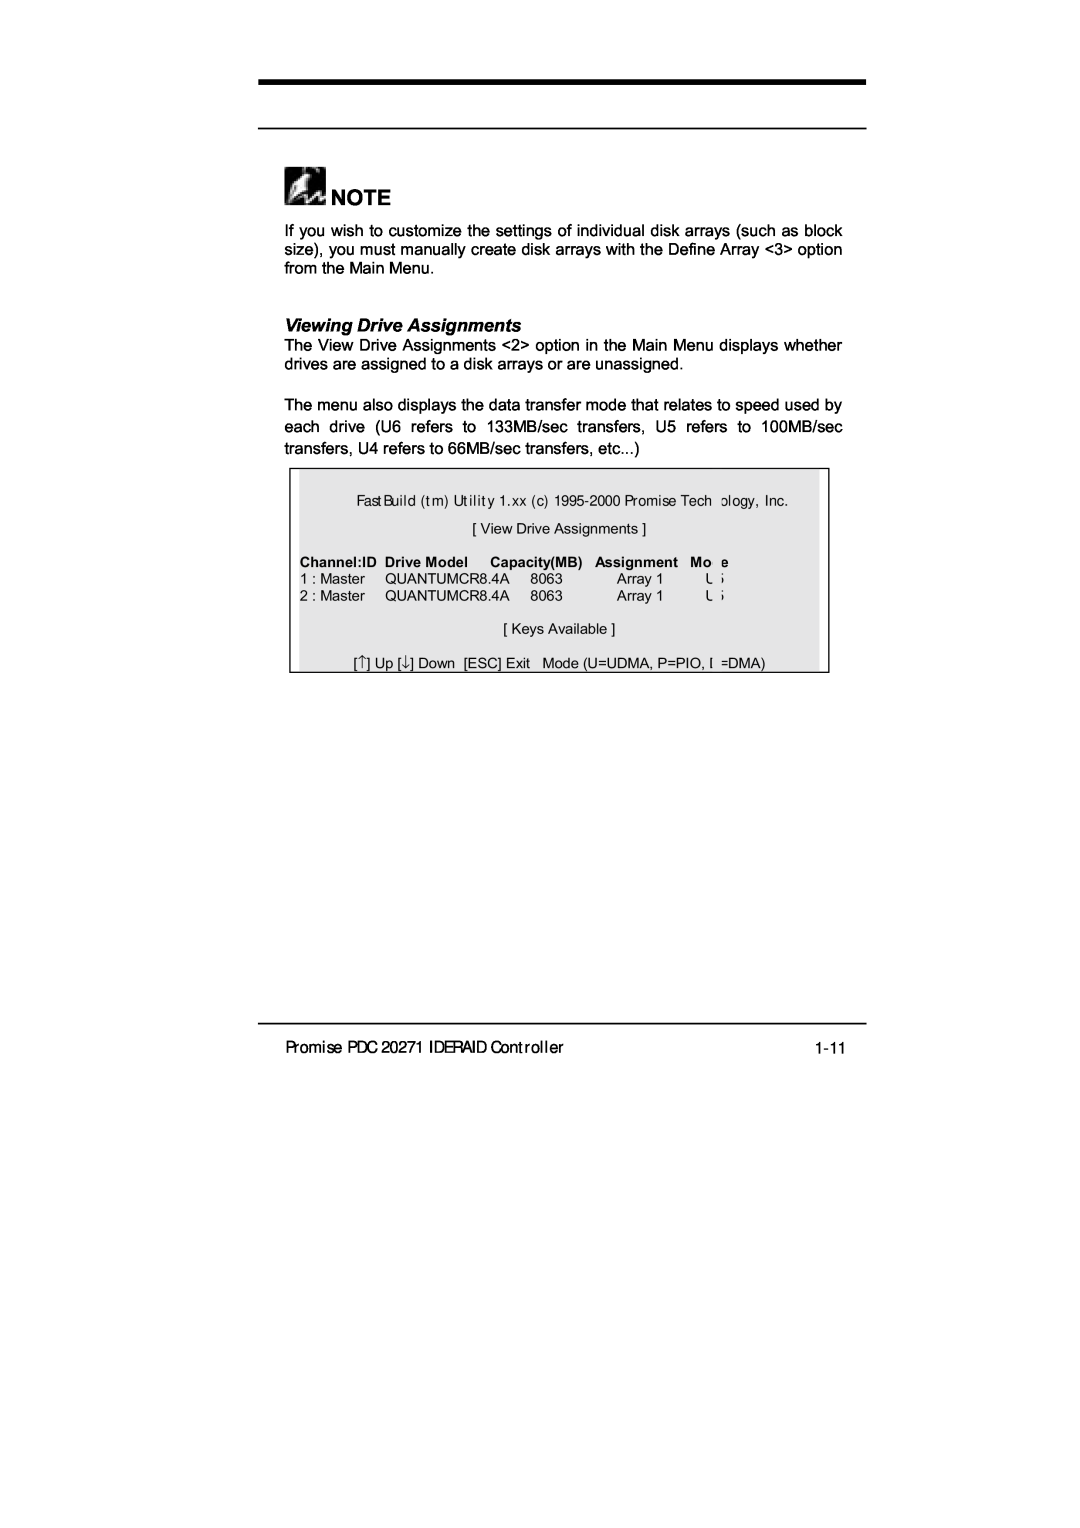 Promise Technology PDC20271 manual 1-11, @. E2F//!%, $% + /# /#, 15&#3, 4G9&942EF&E6 &$9 4G9&942EF&E6 &$9, 17$&83 